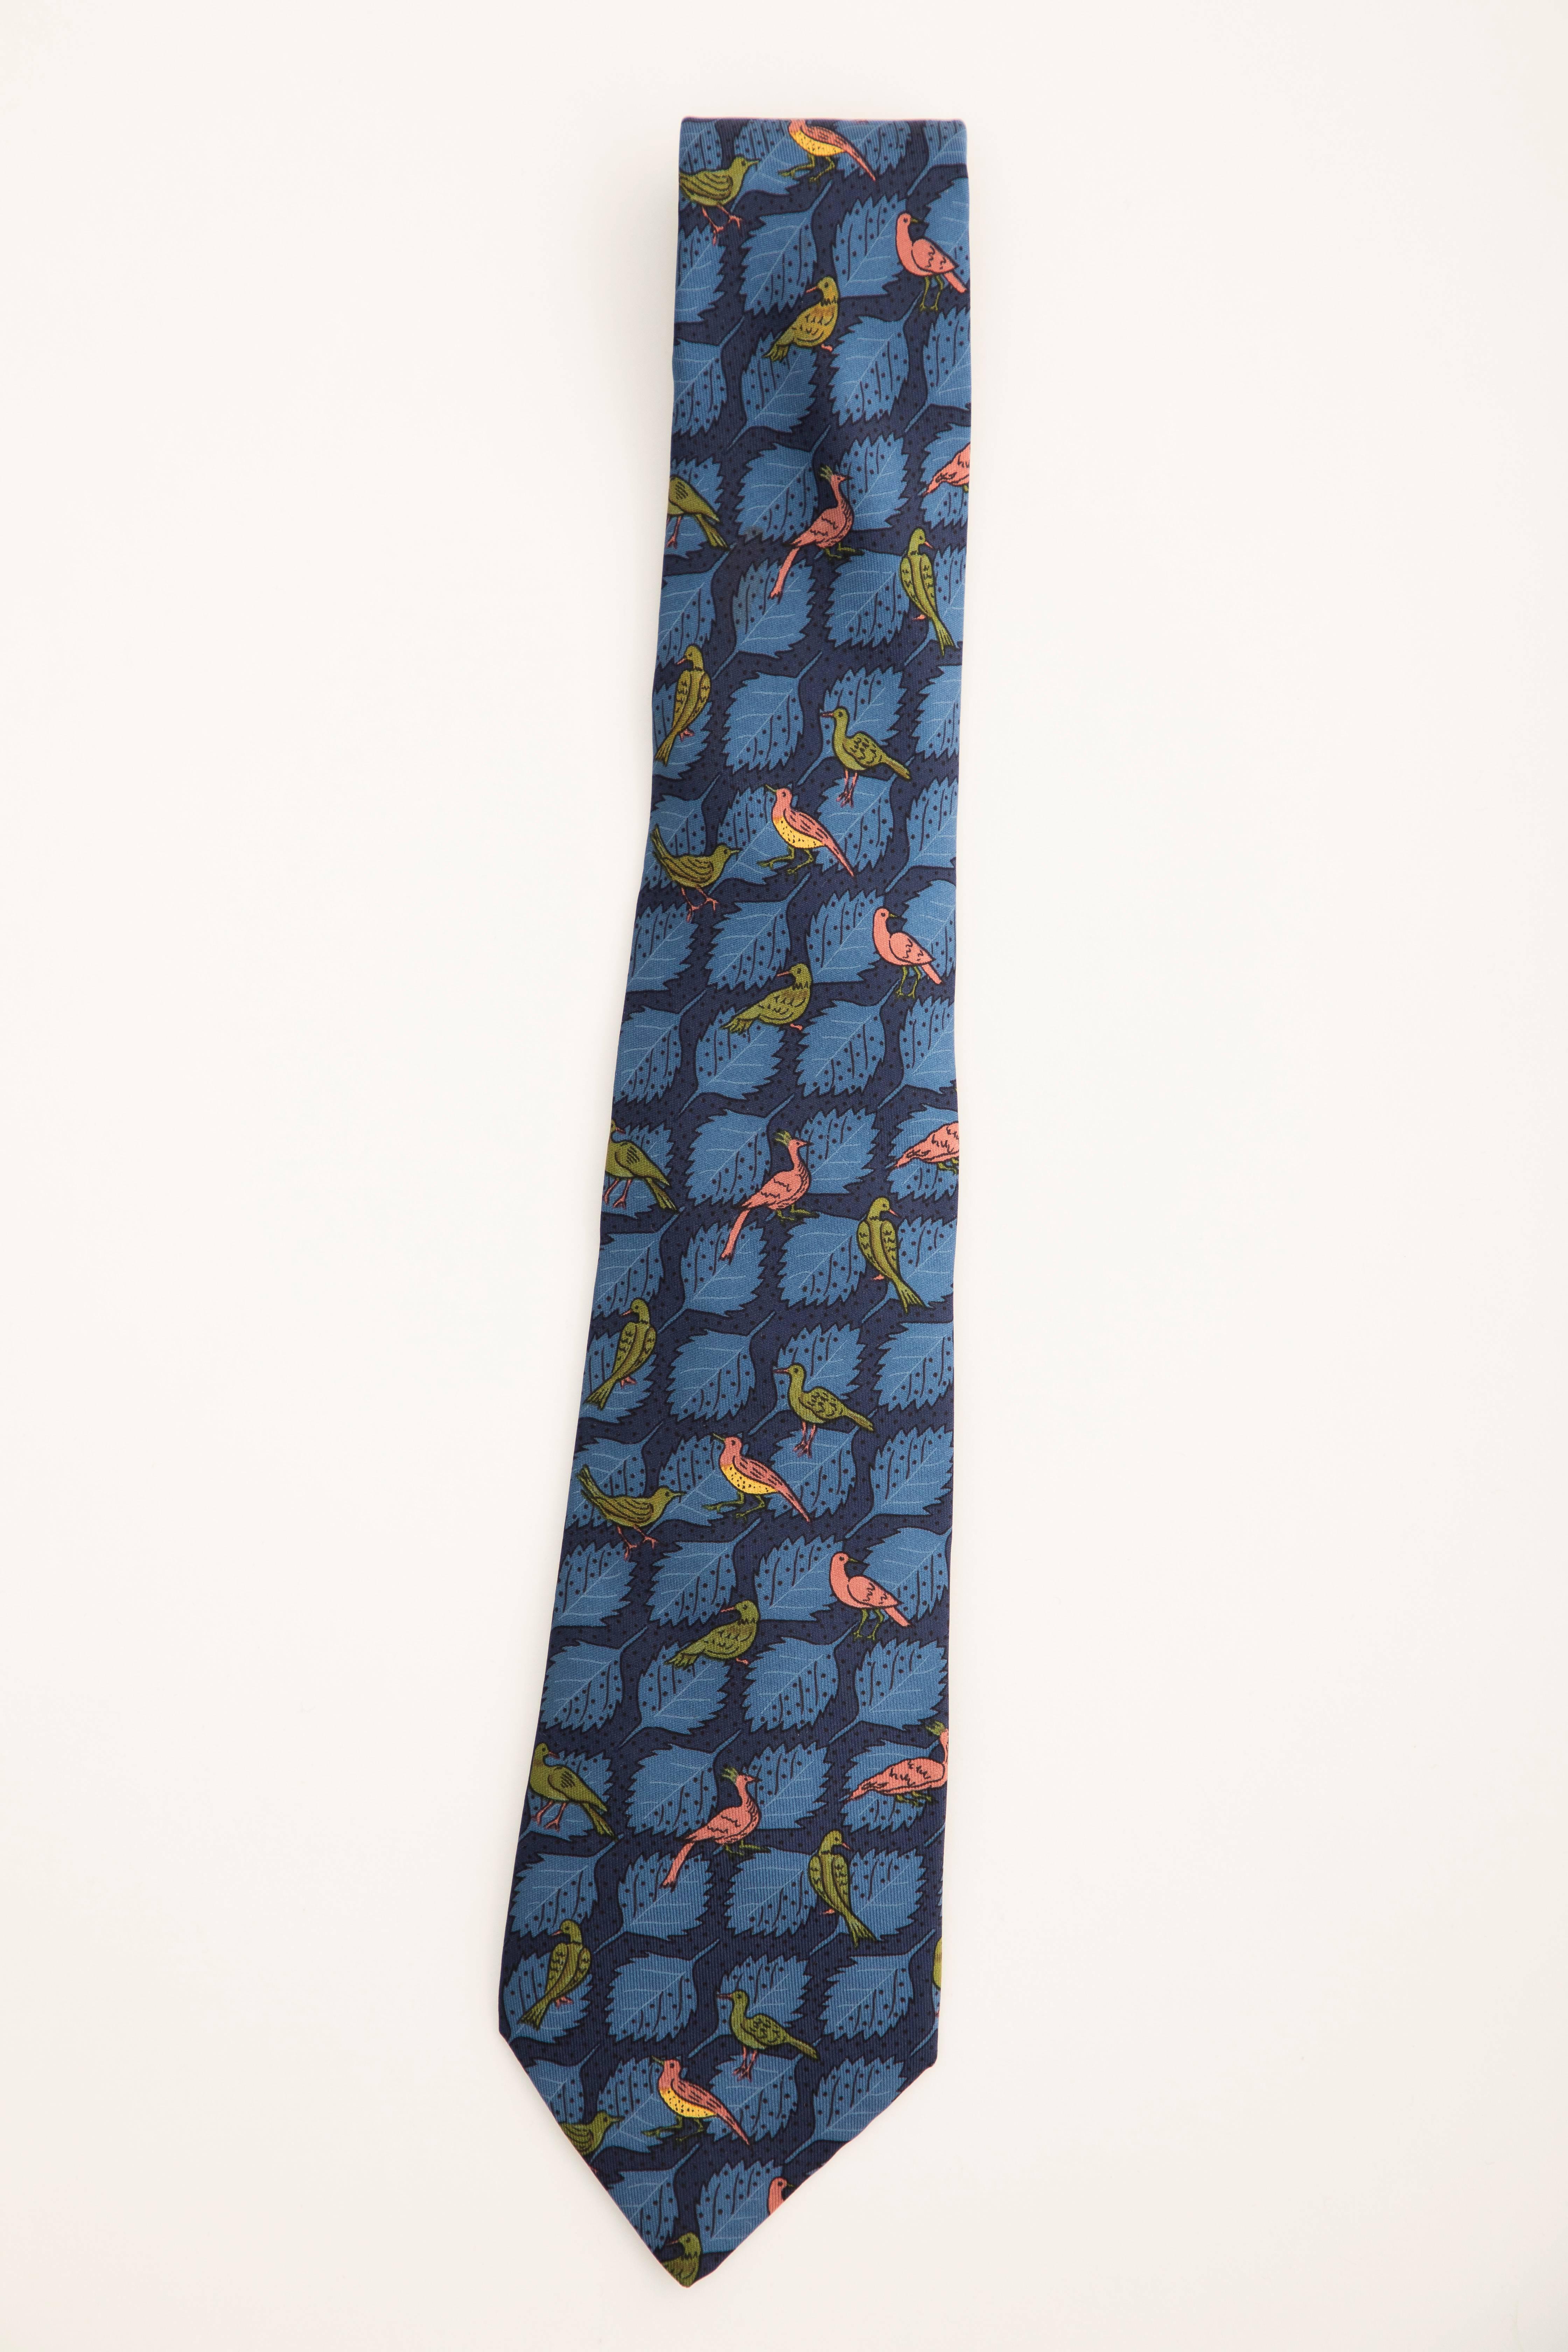  Hermès men's printed blue silk tie with bird and leaf motif throughout.


Length: 57, Width 3
